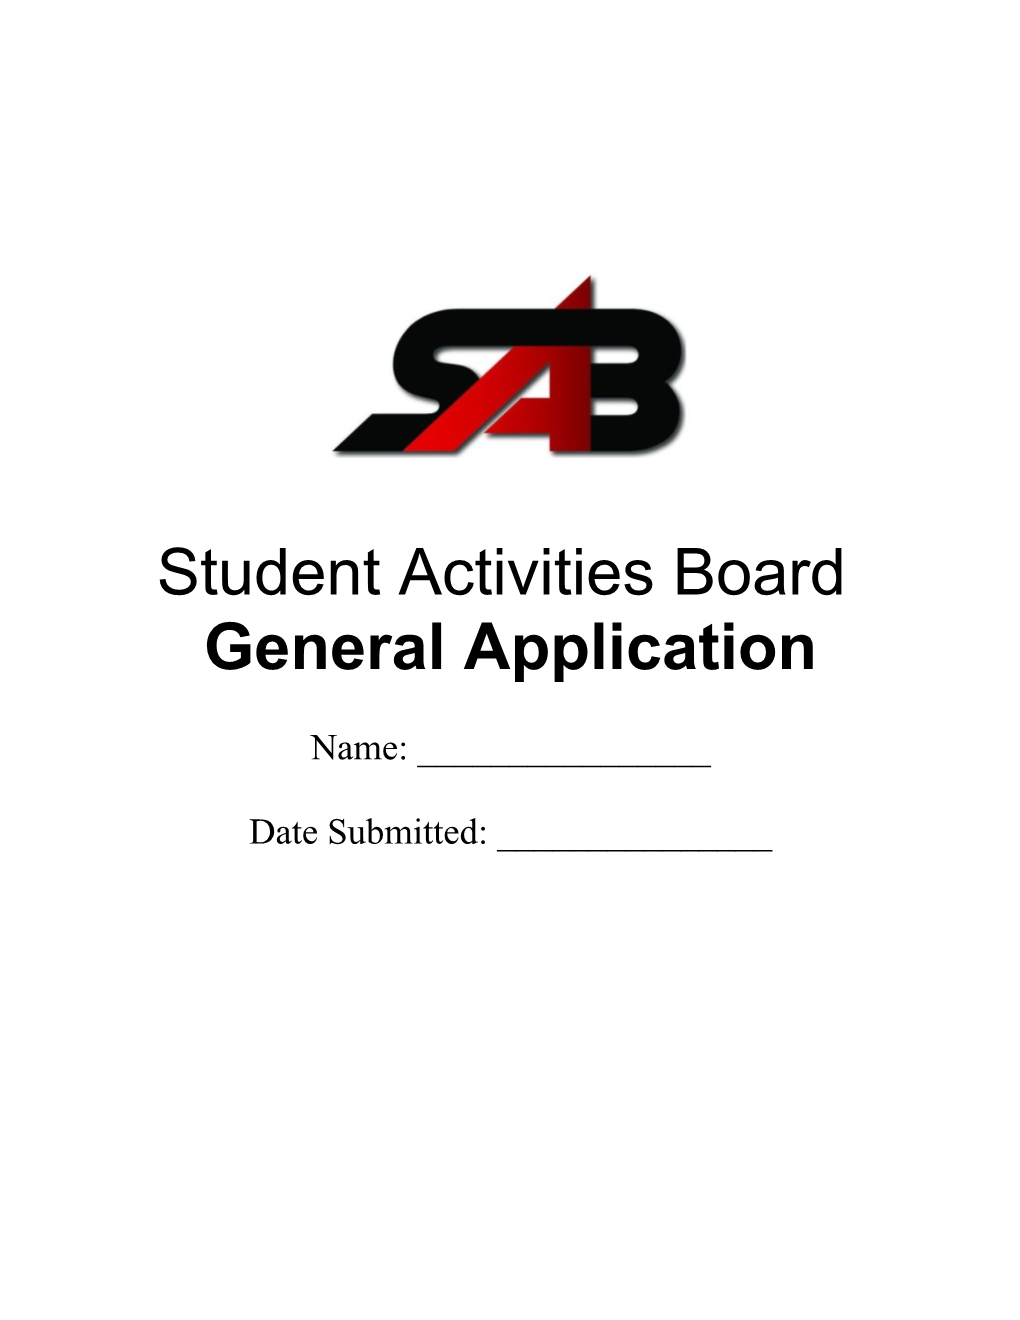 General Application